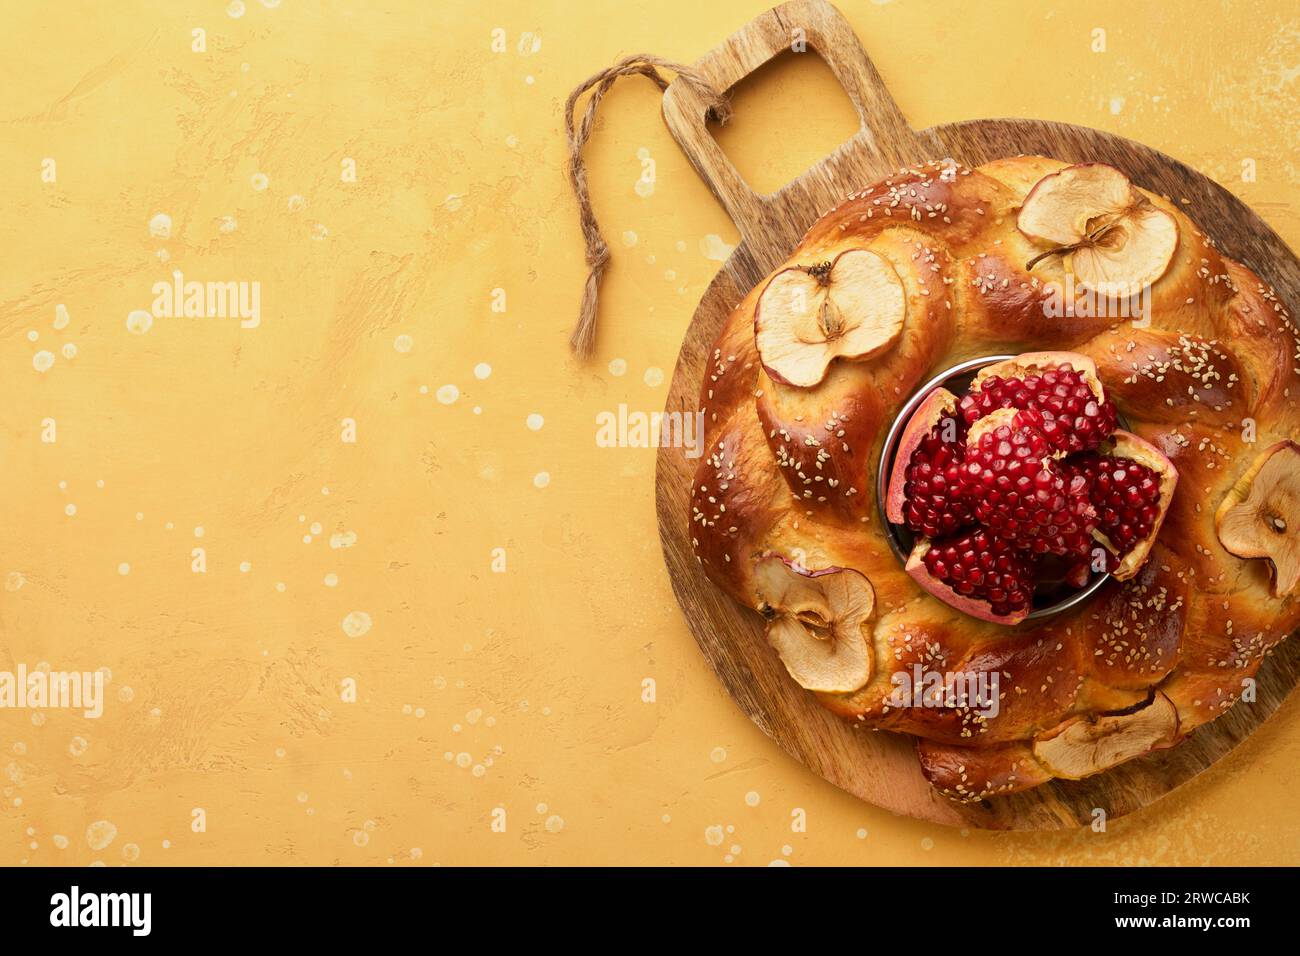 Jewish Holidays - Rosh Hashanah or Rosh Hashana. Pomegranate, apples, honey and round challah on rustic yellow table background. Jewish Autumn celebra Stock Photo